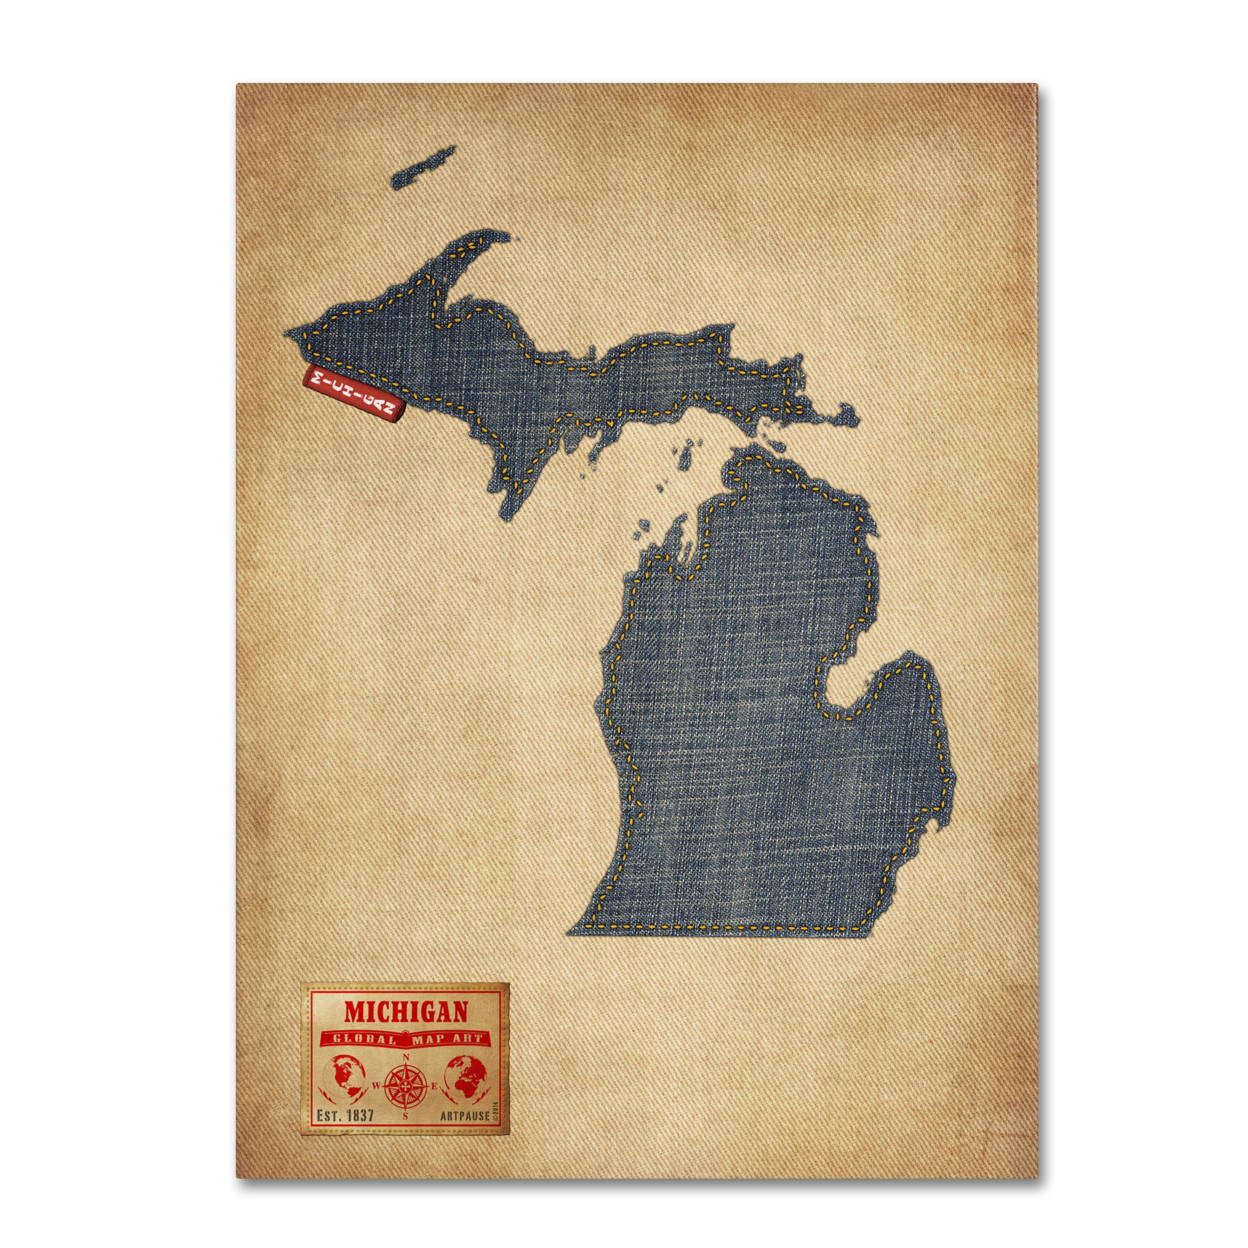 Michael Tompsett 'Michigan Map Denim Jeans Style' Canvas Wall Art 35 X 47 Inches